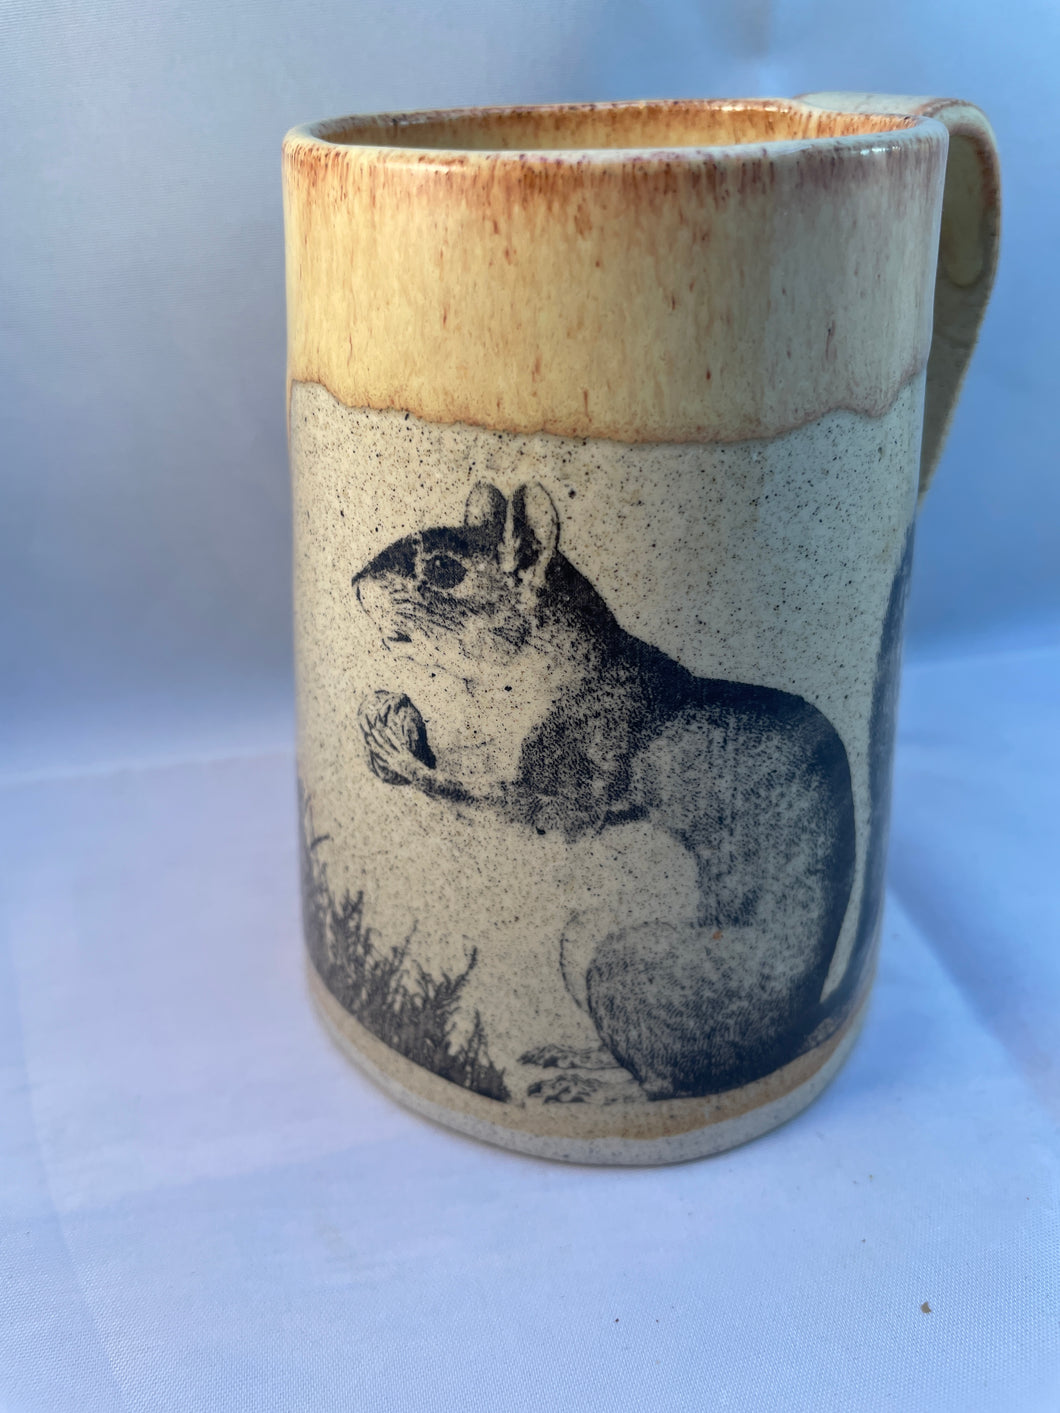 Squirrel, Acorn, Ladybug, and Paw Print ArtPrize Mug - glossy butter